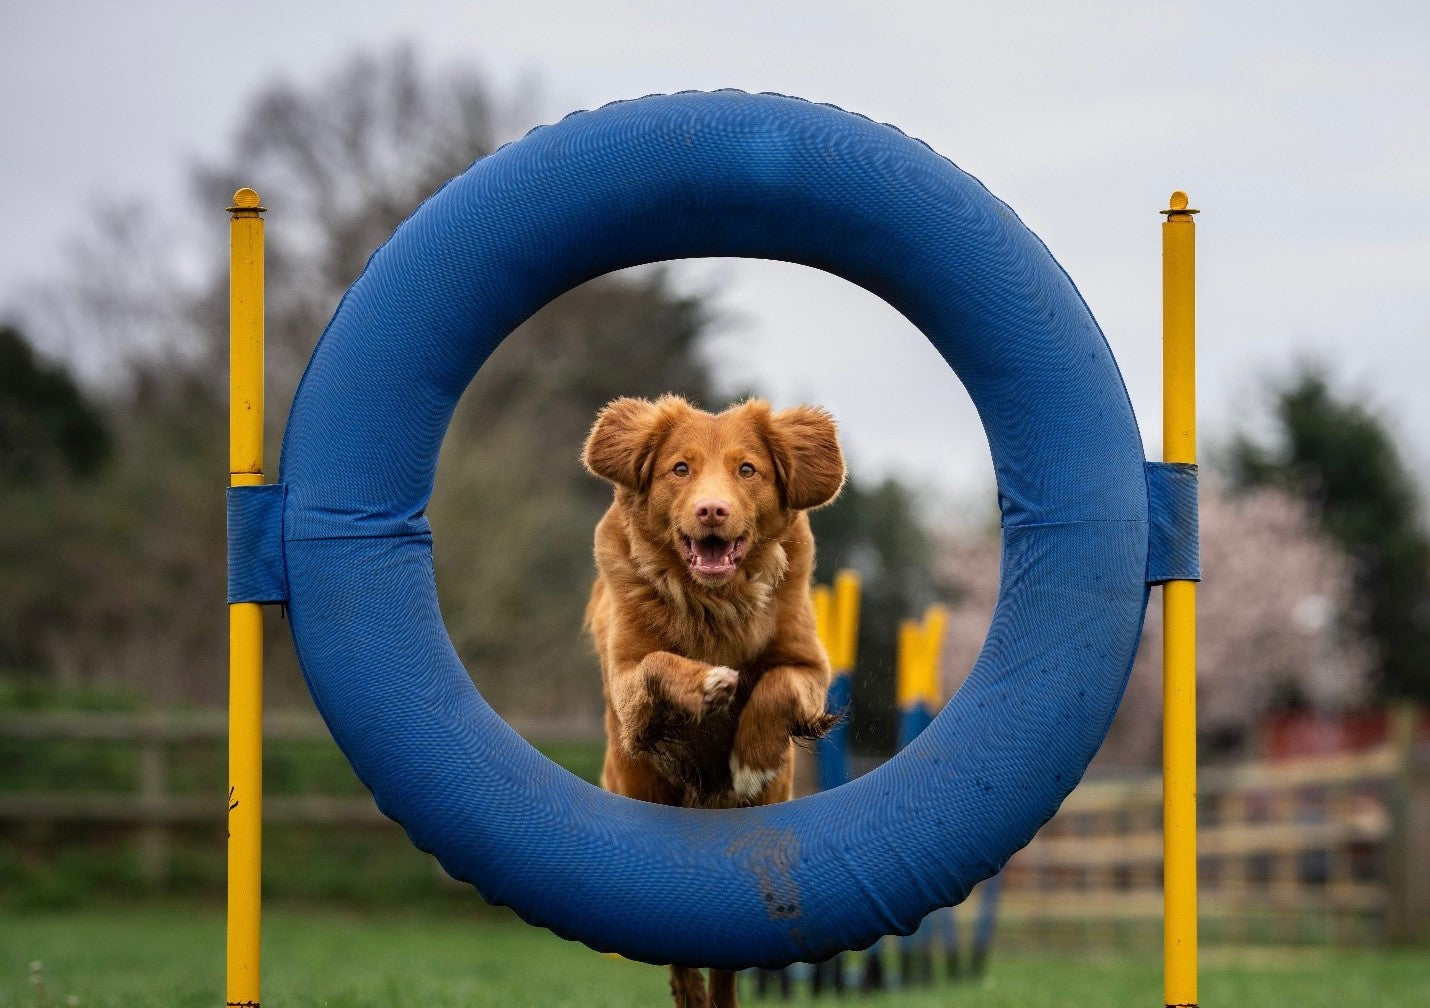 Agility dog jumping through a big blue hoop